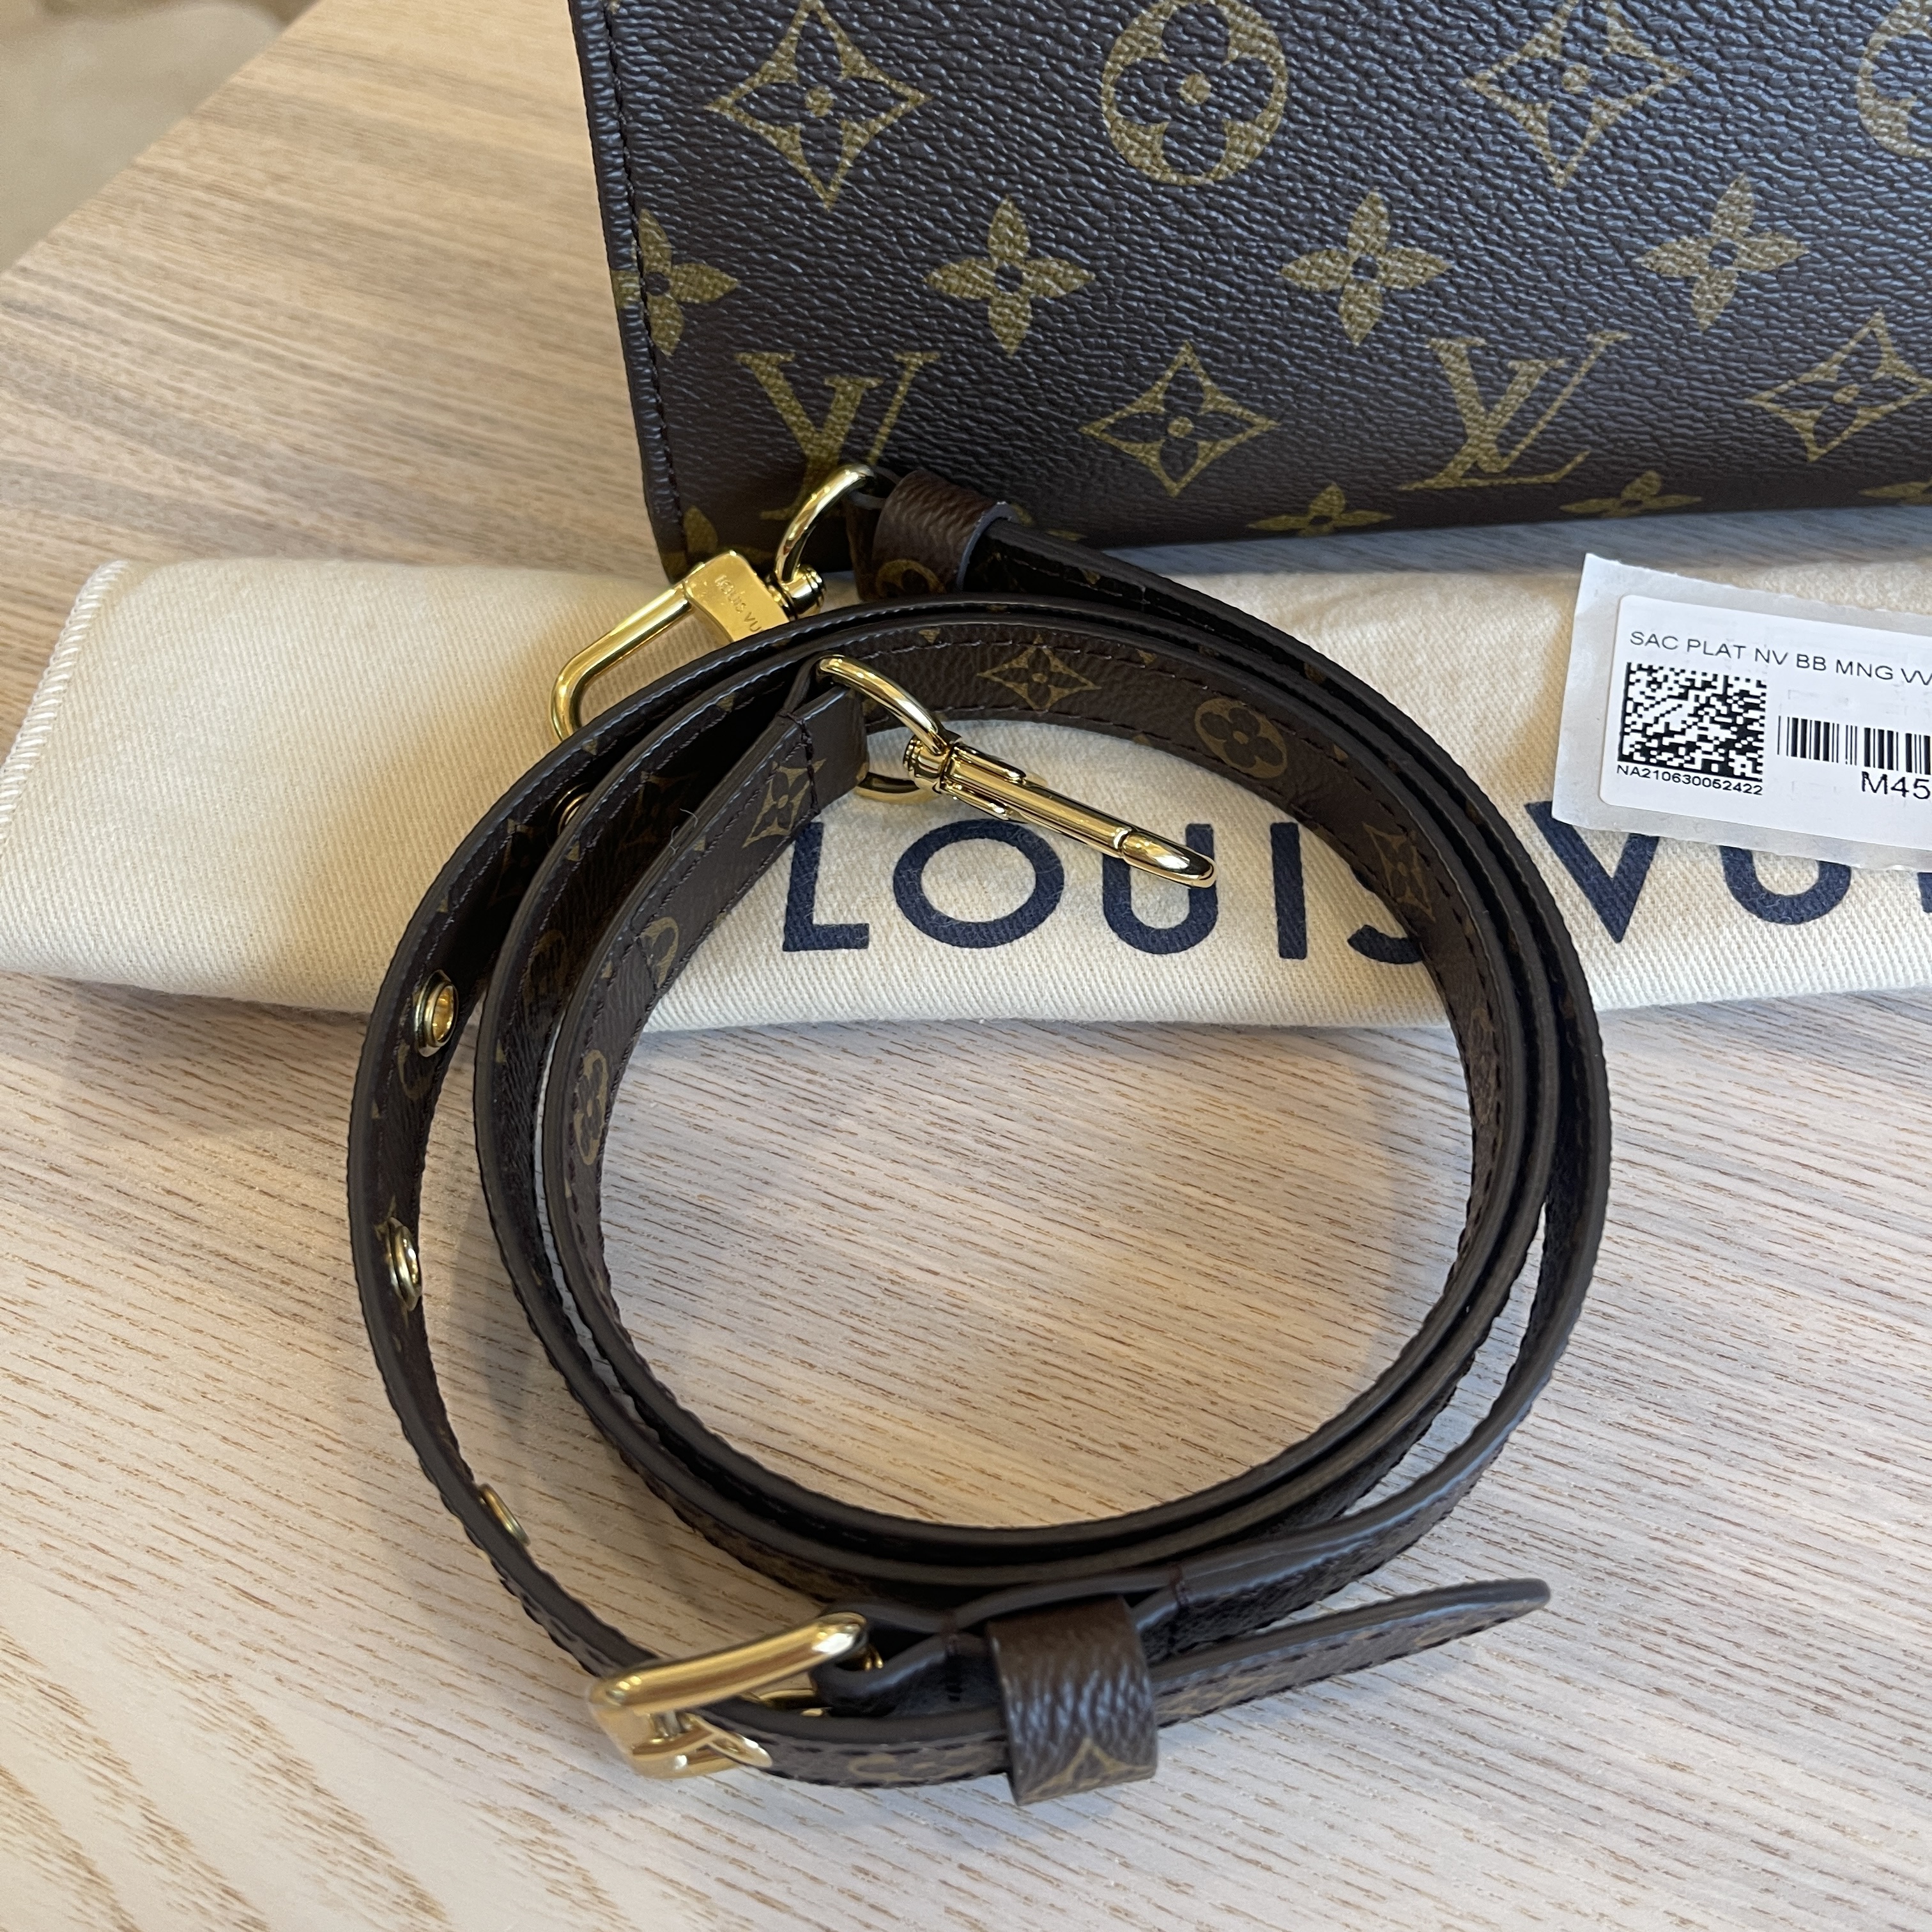 Louis Vuitton Sac Plat Nv, Brown, One Size